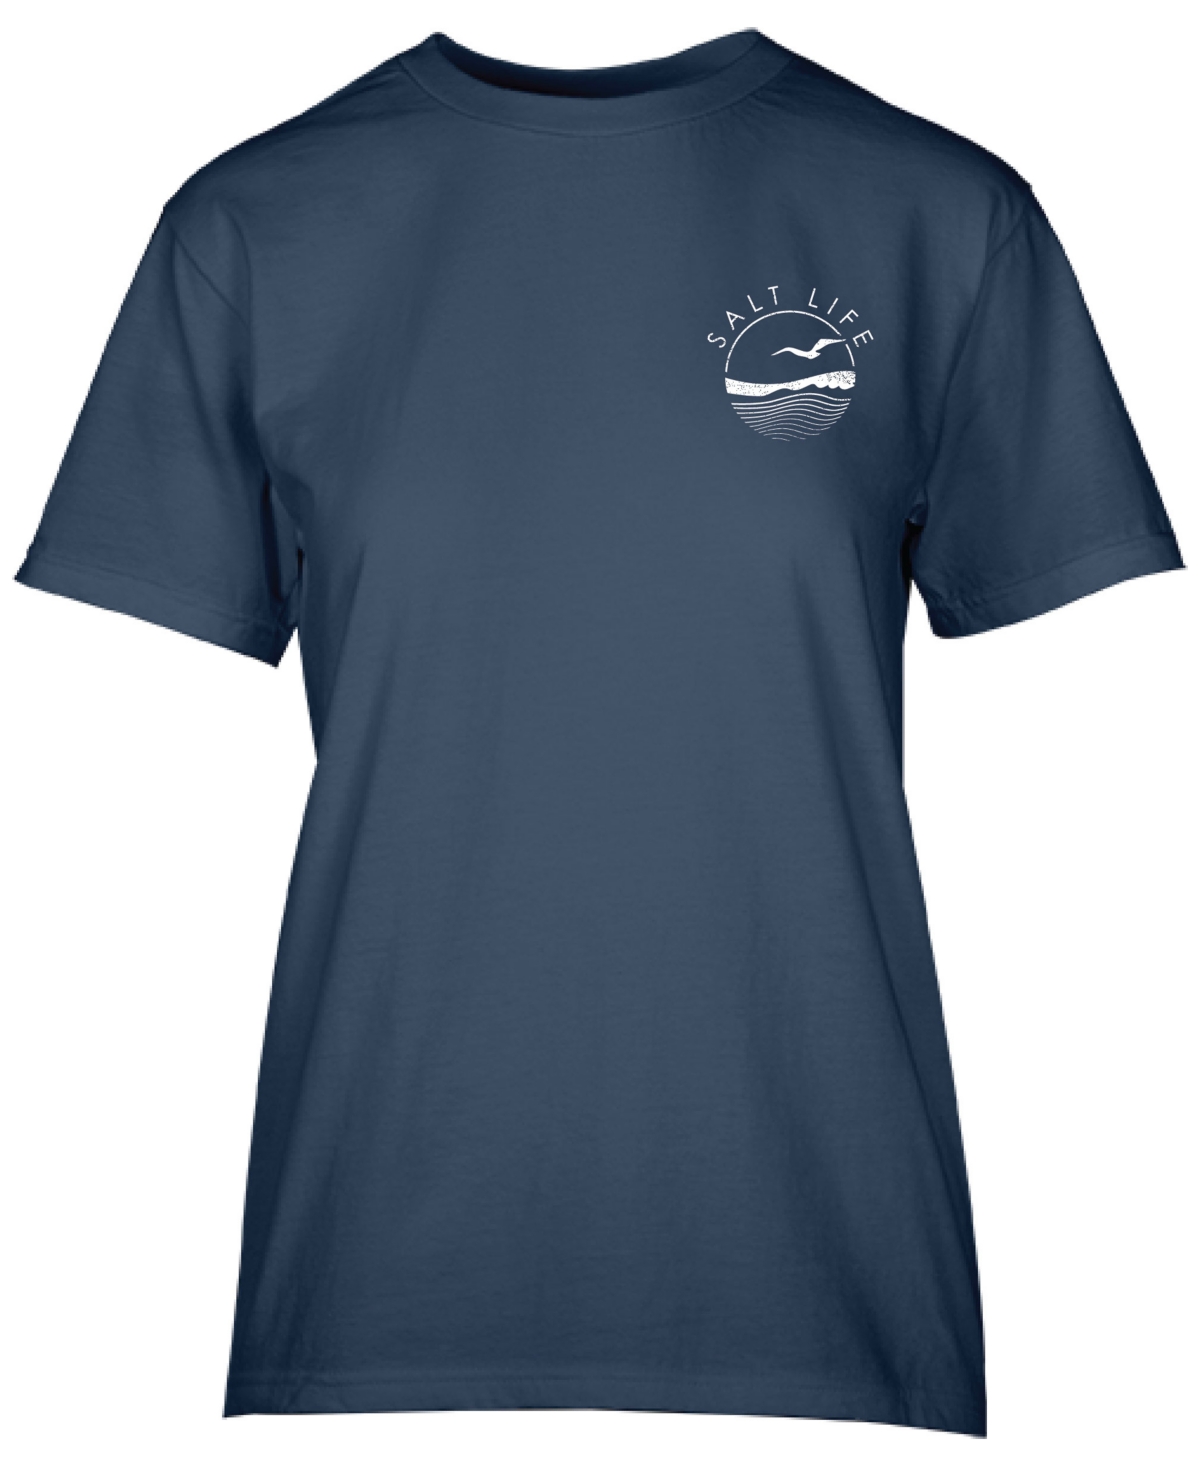 Women's Horizon Cotton Short-Sleeve T-Shirt - Washed Navy